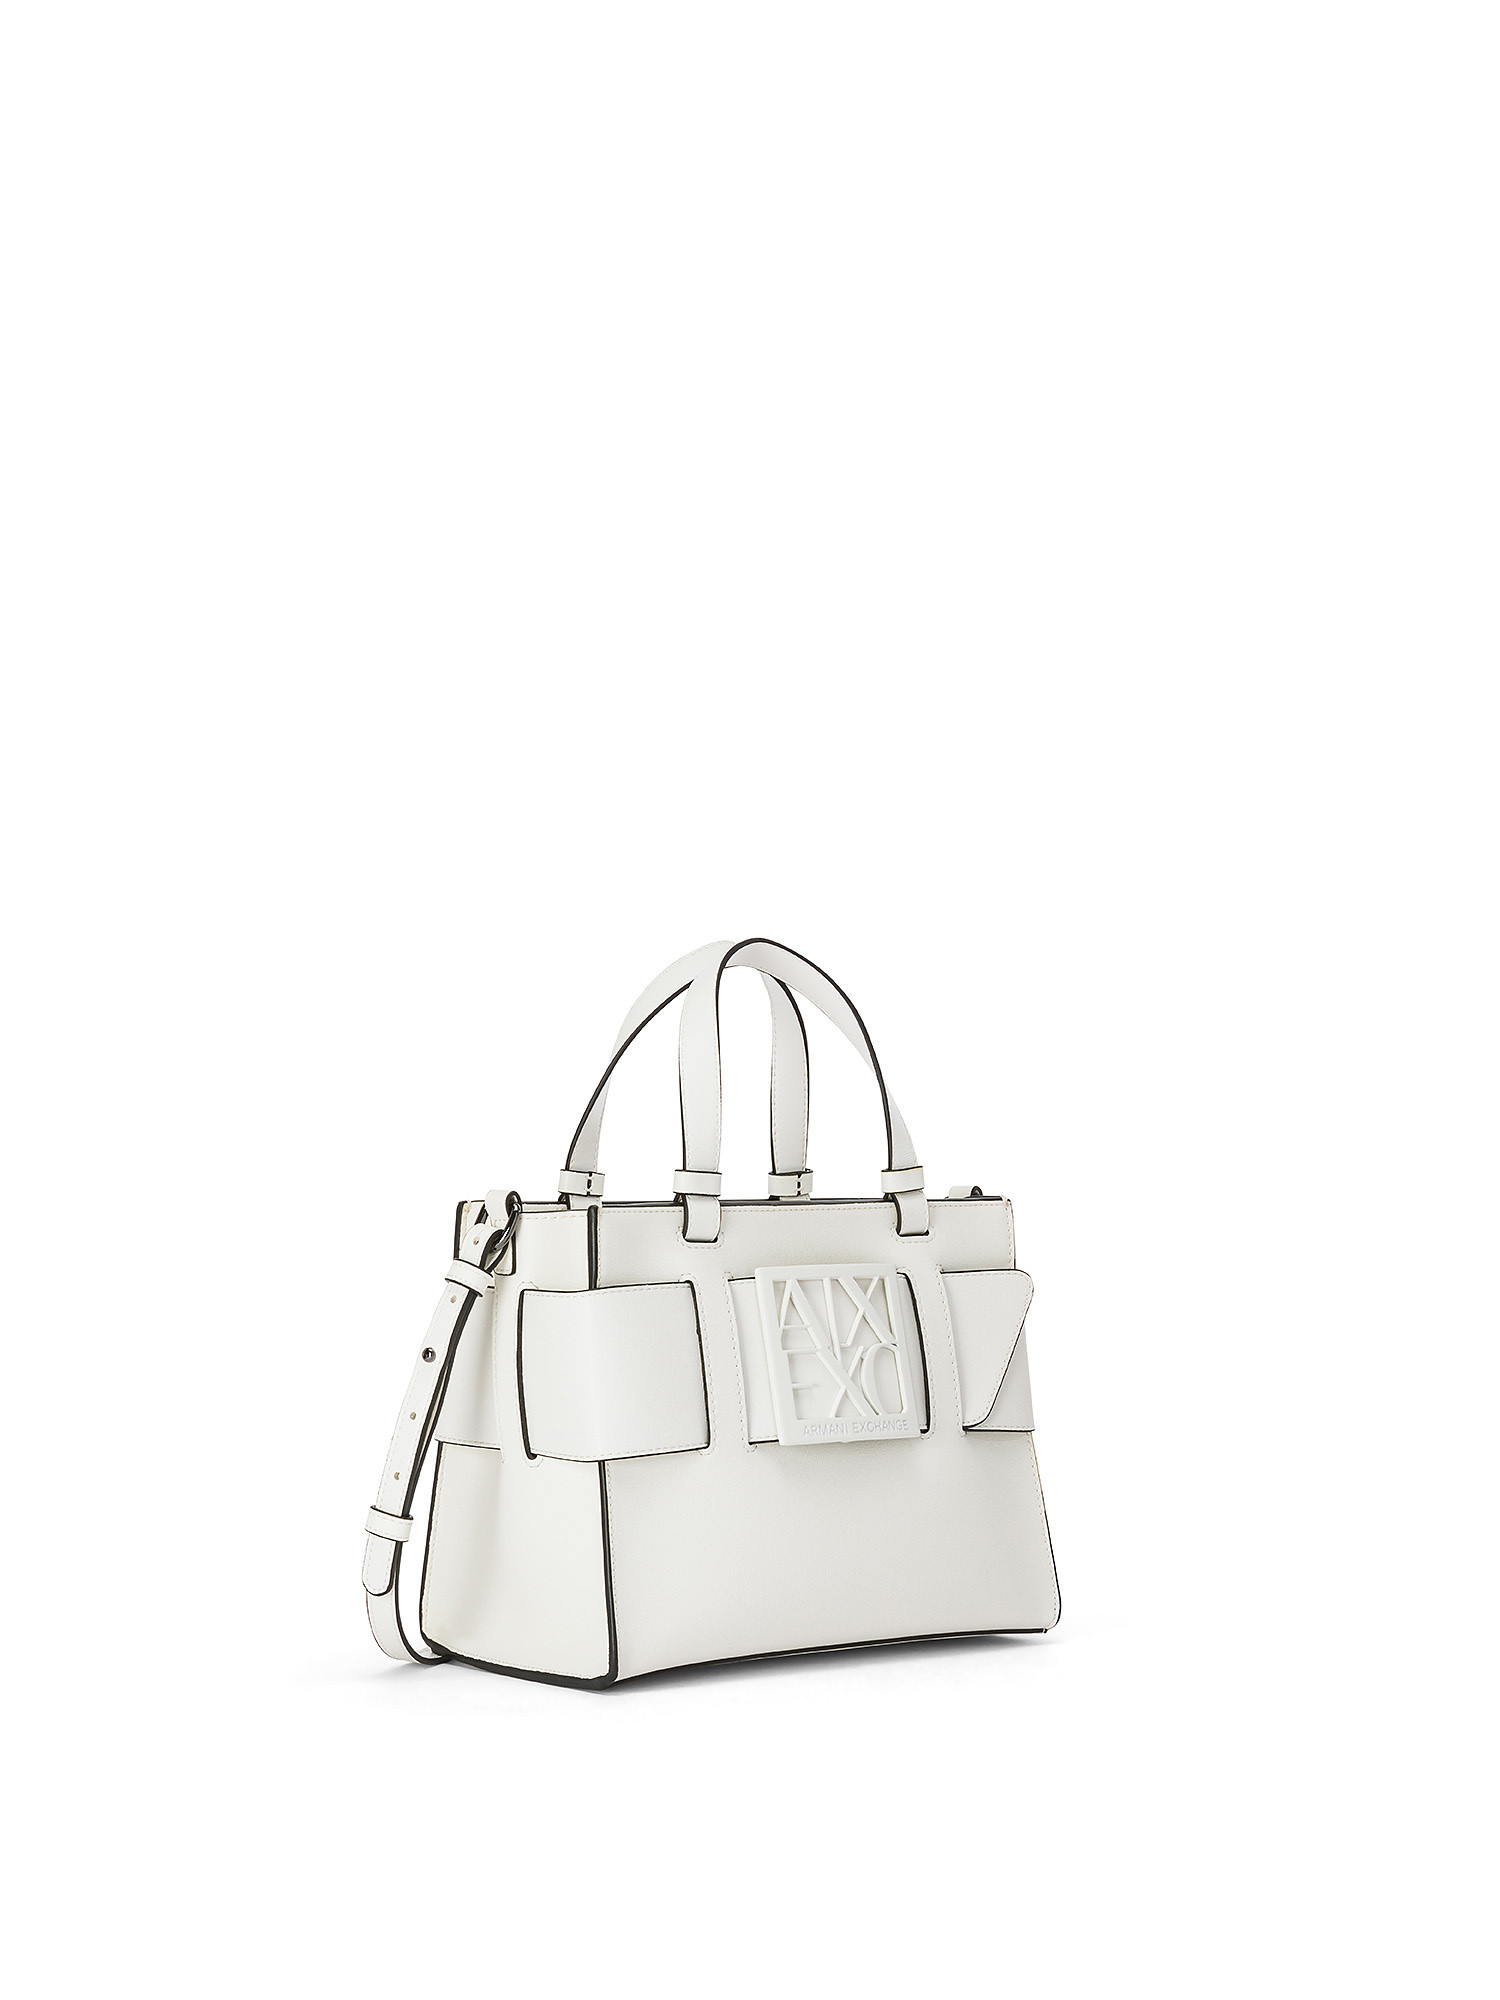 Armani Exchange - Medium tote bag with logo, Ice White, large image number 1